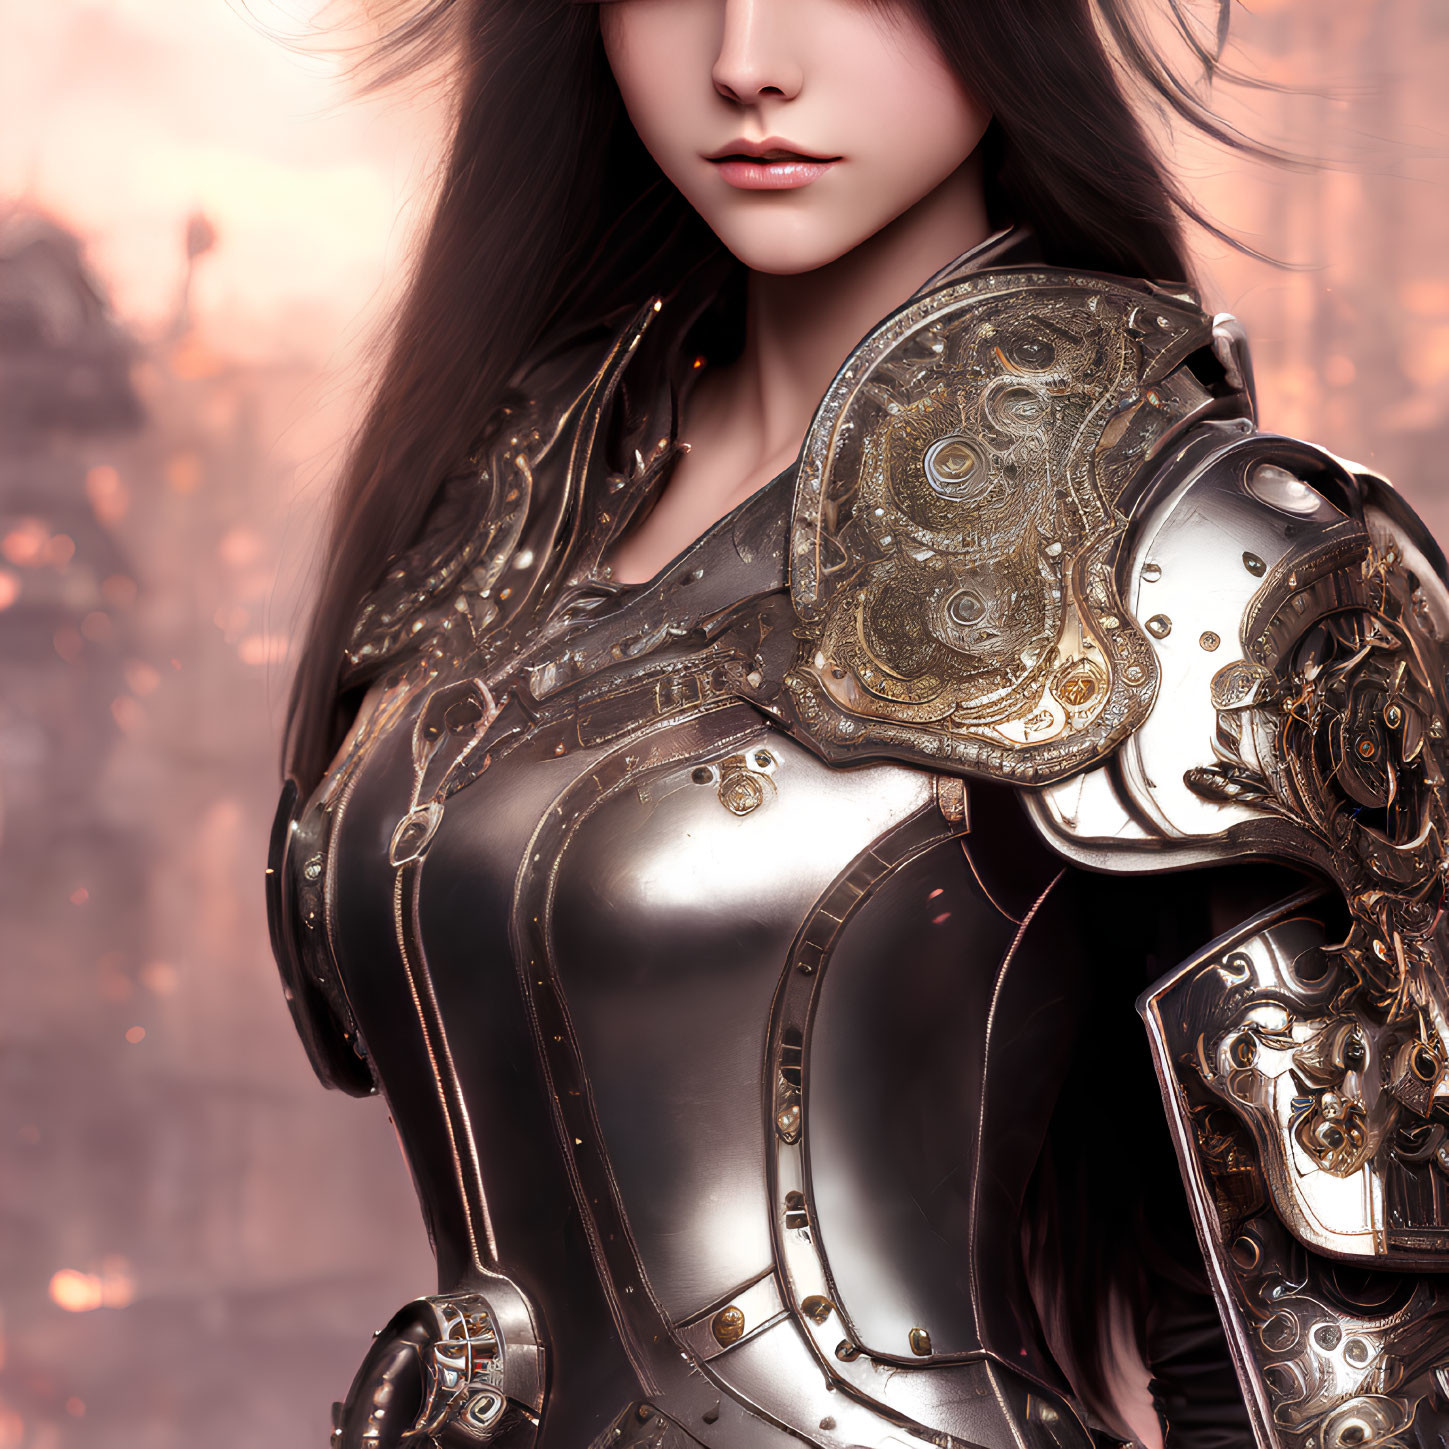 Female warrior with long dark hair in ornate metallic armor against blurred background